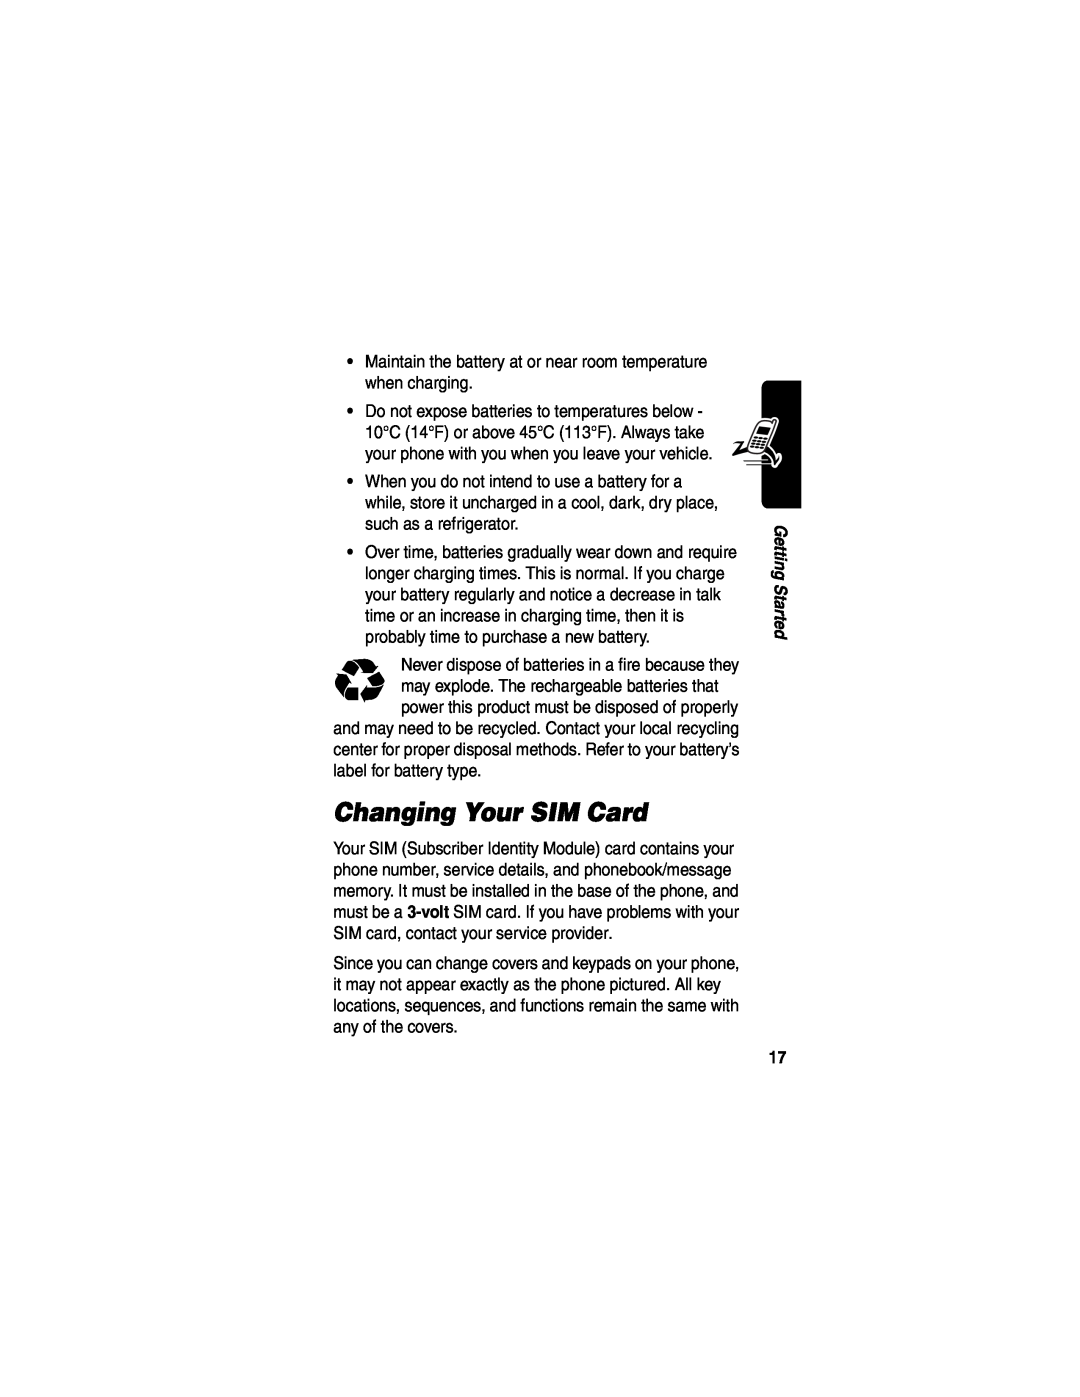 Motorola WIRELESS TELEPHONE manual Changing Your SIM Card 